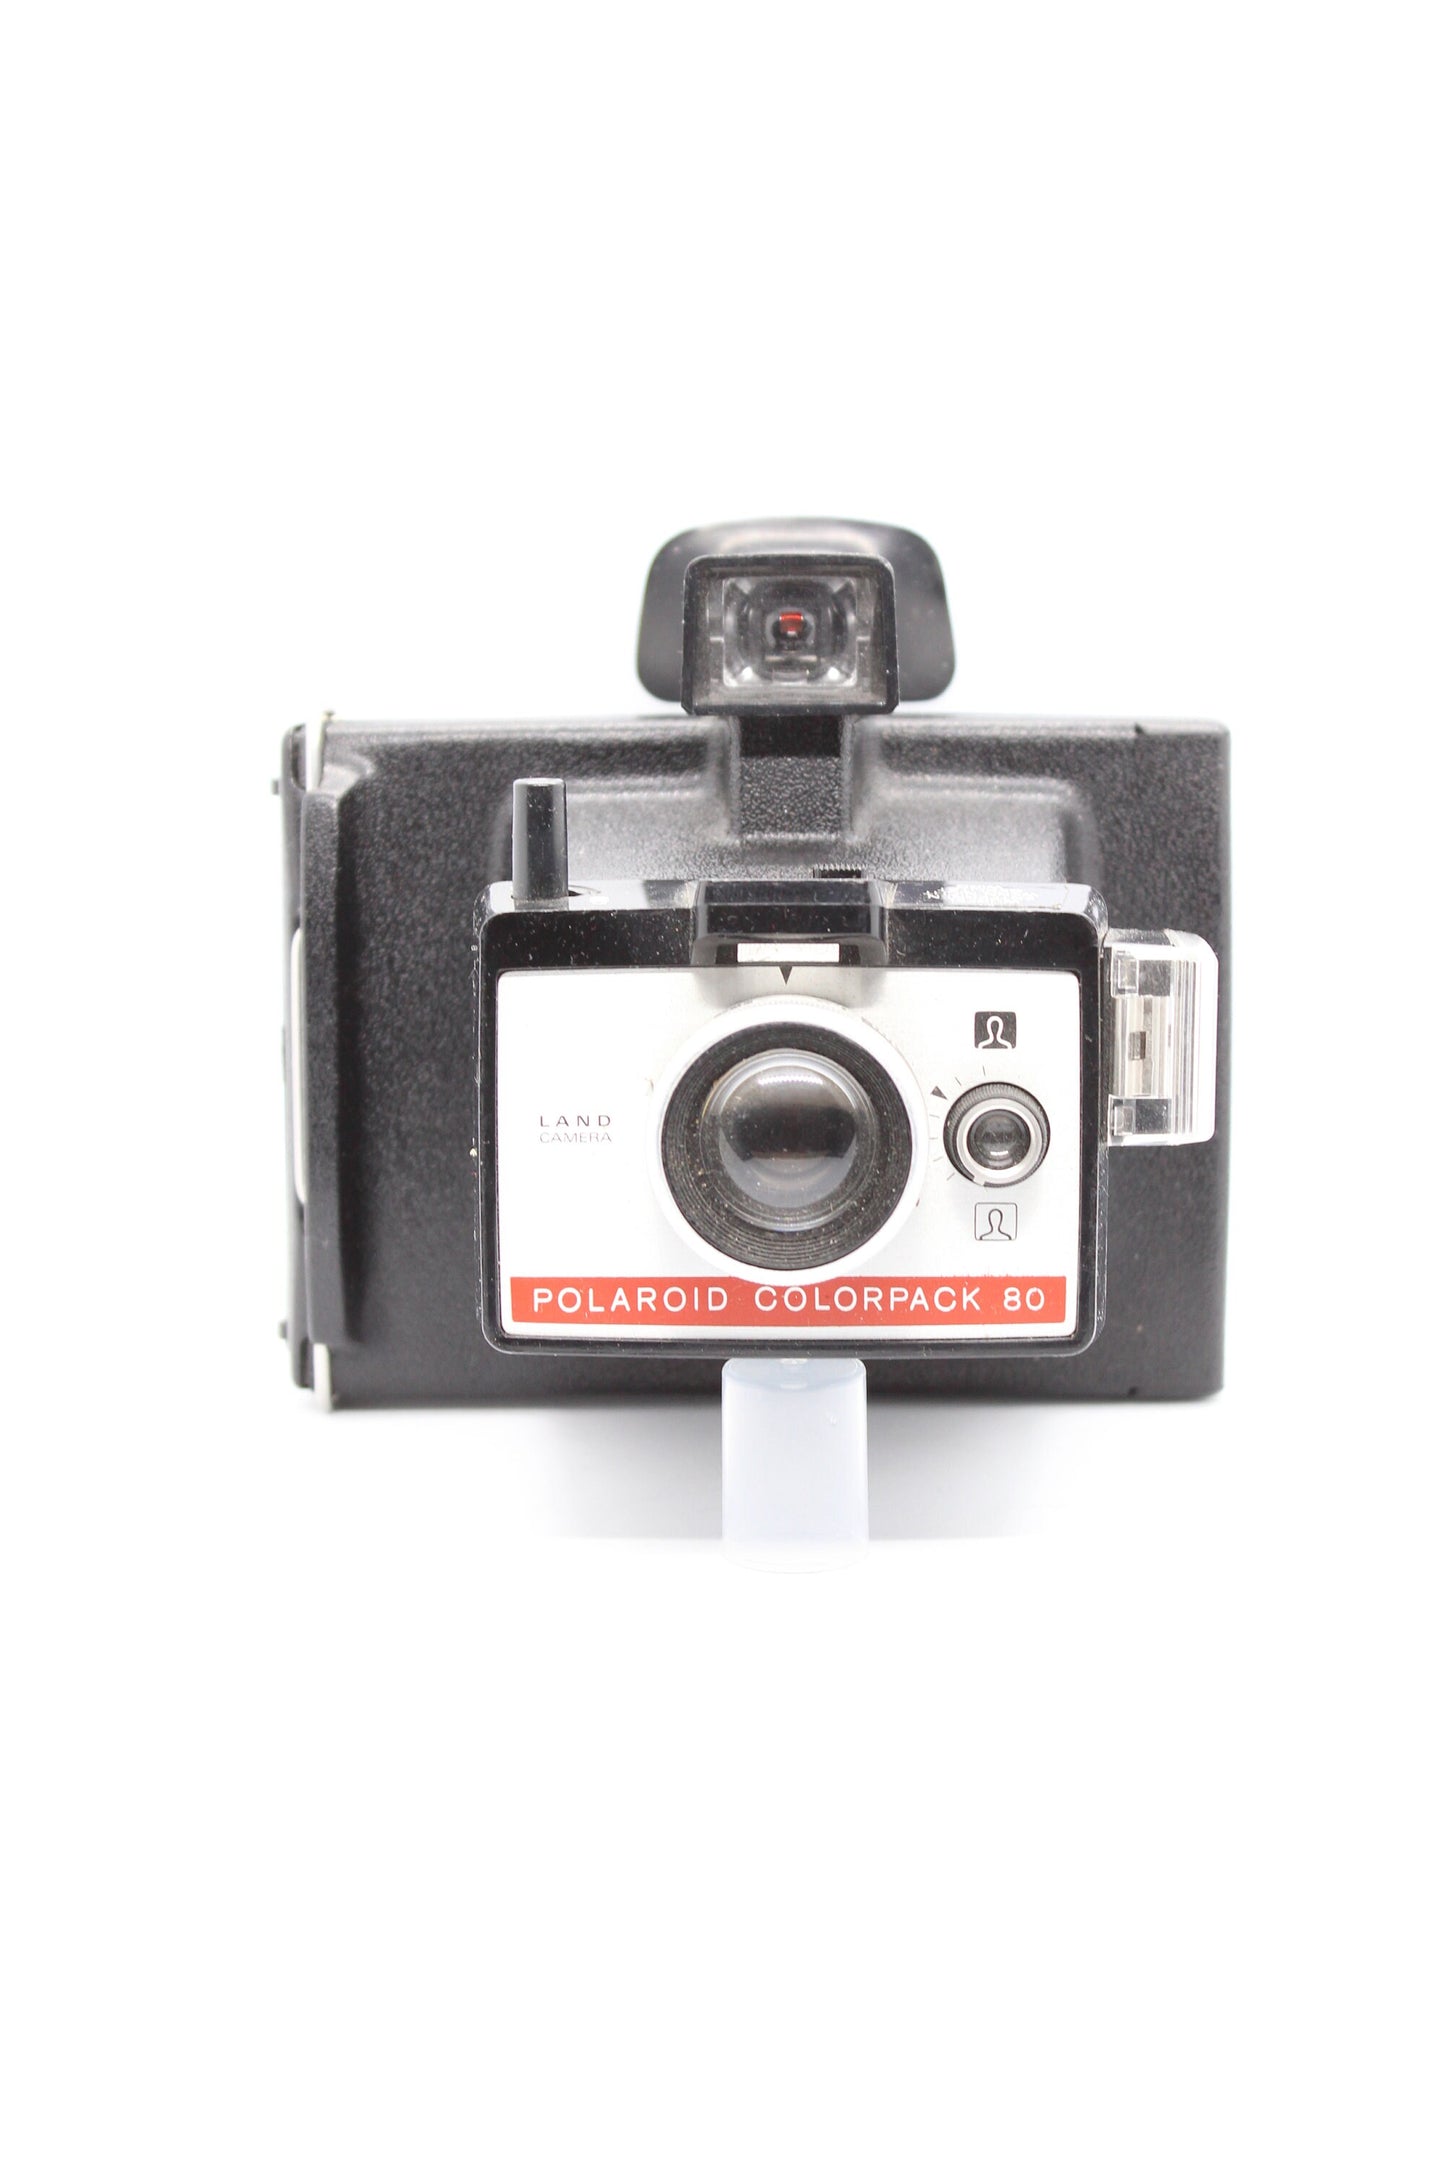 Polaroid Colorpack 80 Camera